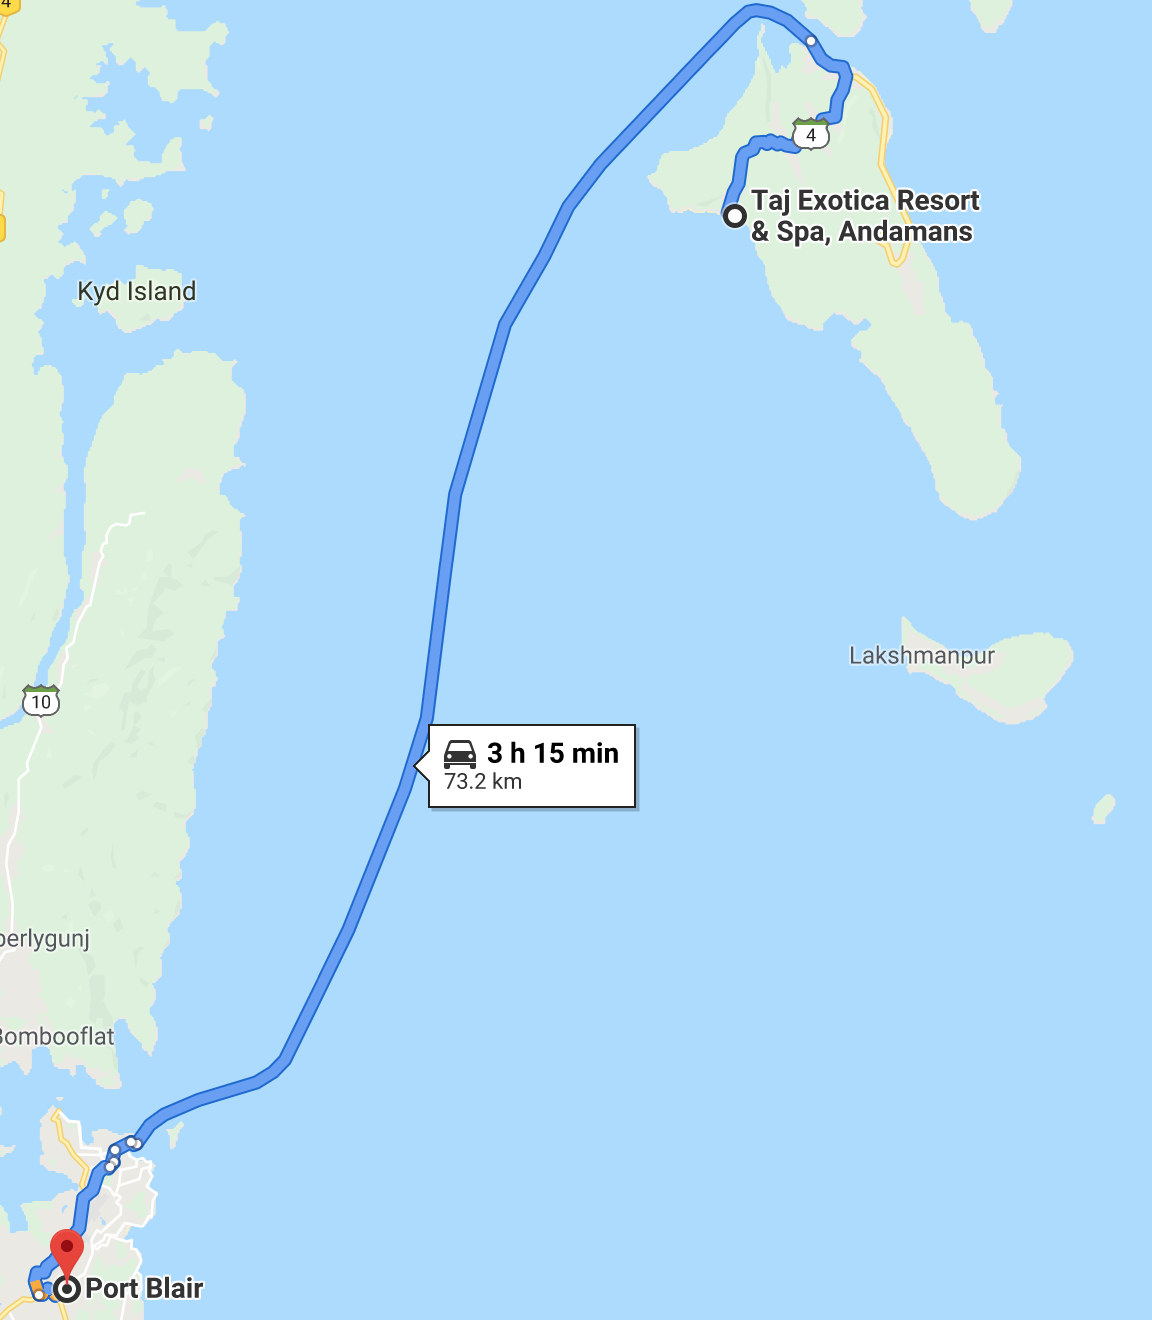 Distance from Havelock Island to Aberdeen bazaar, Port Blair - Andaman Islands